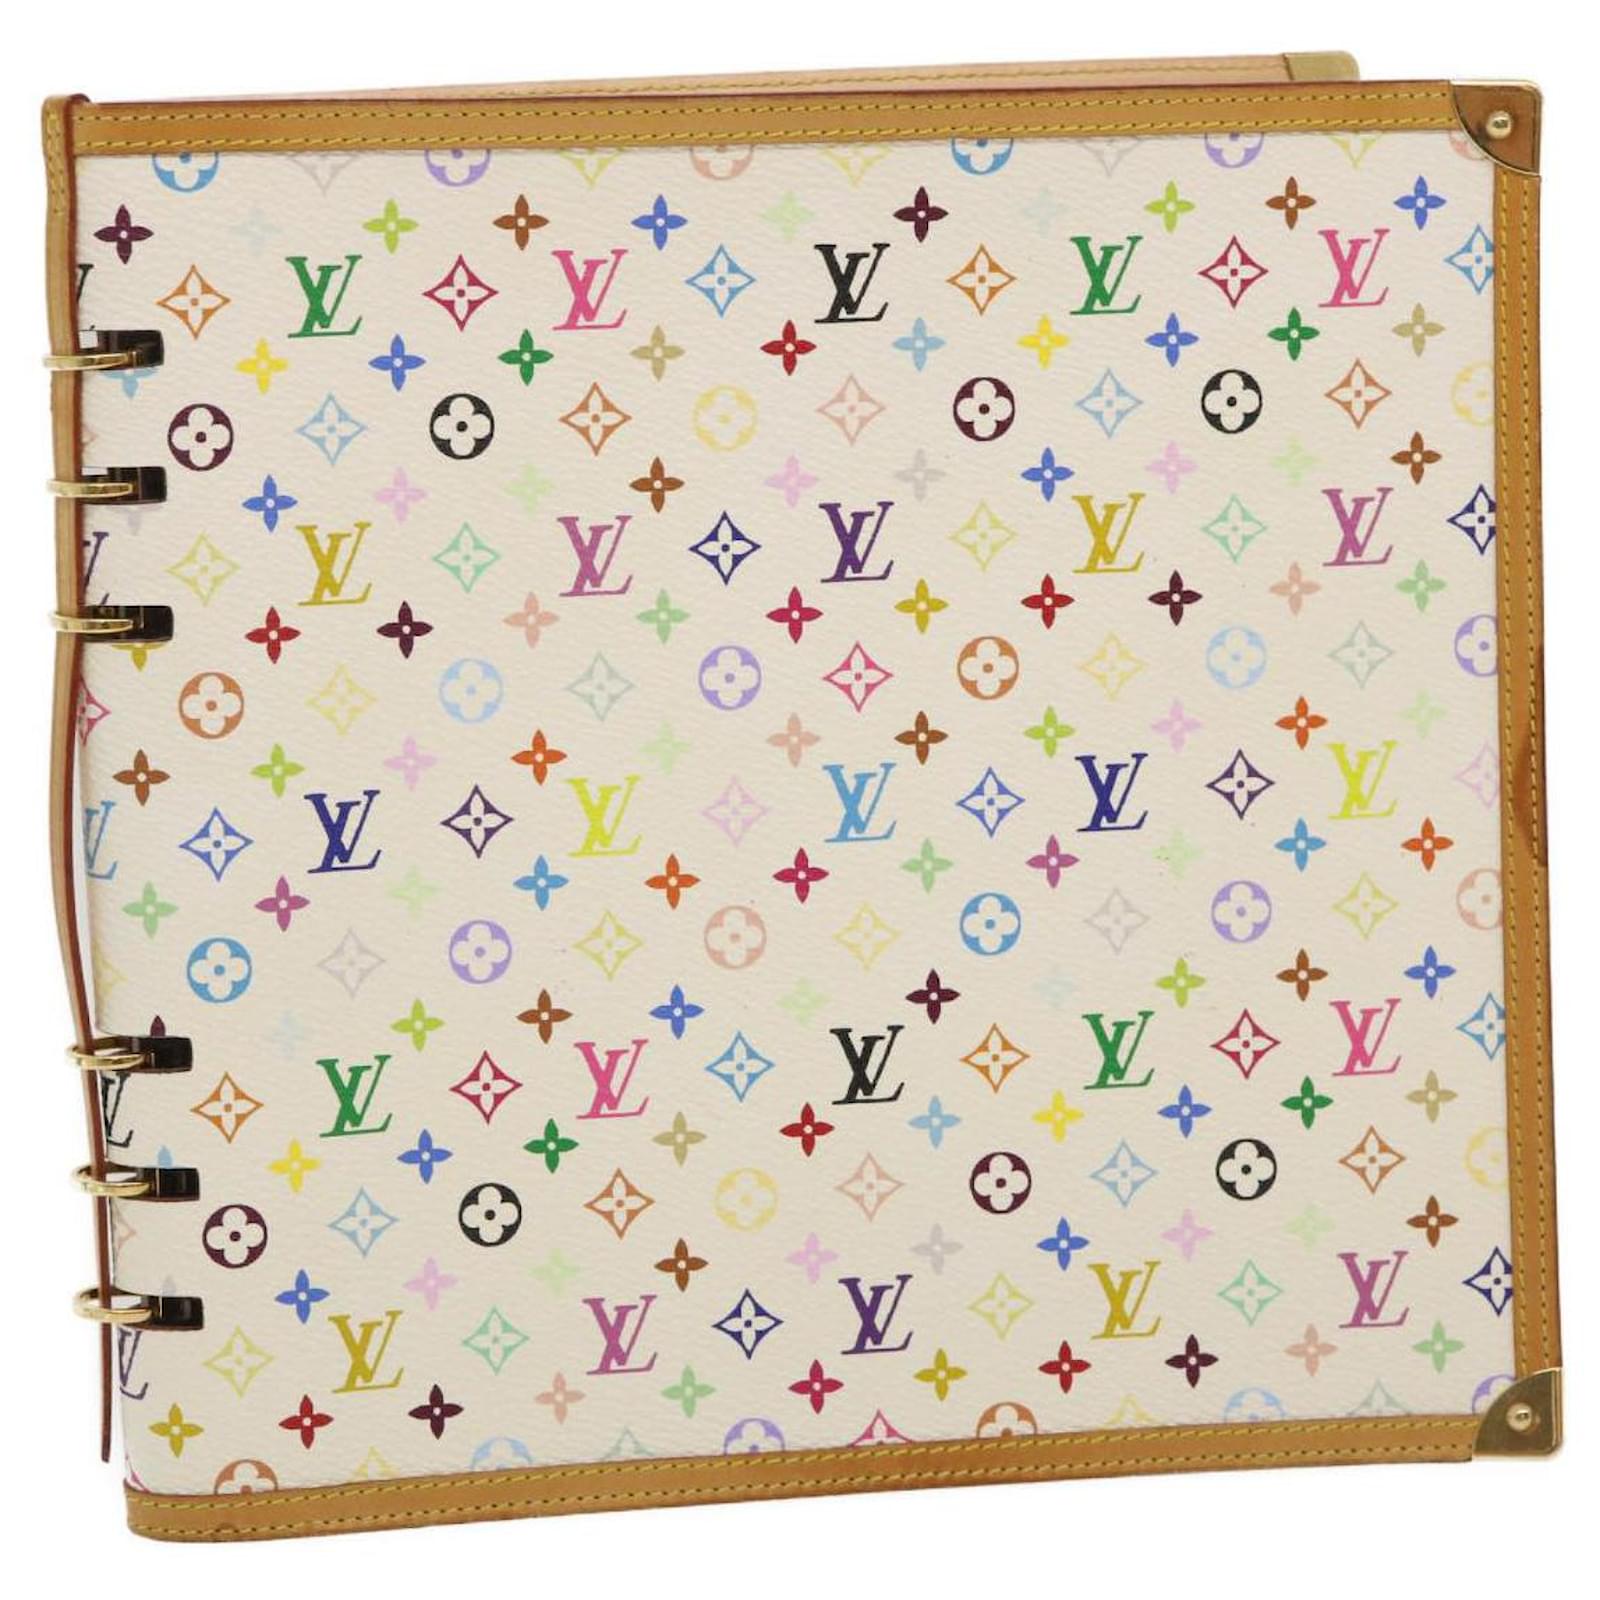 Louis Vuitton Monogram Agenda Bureau Note Cover Notebook Cover